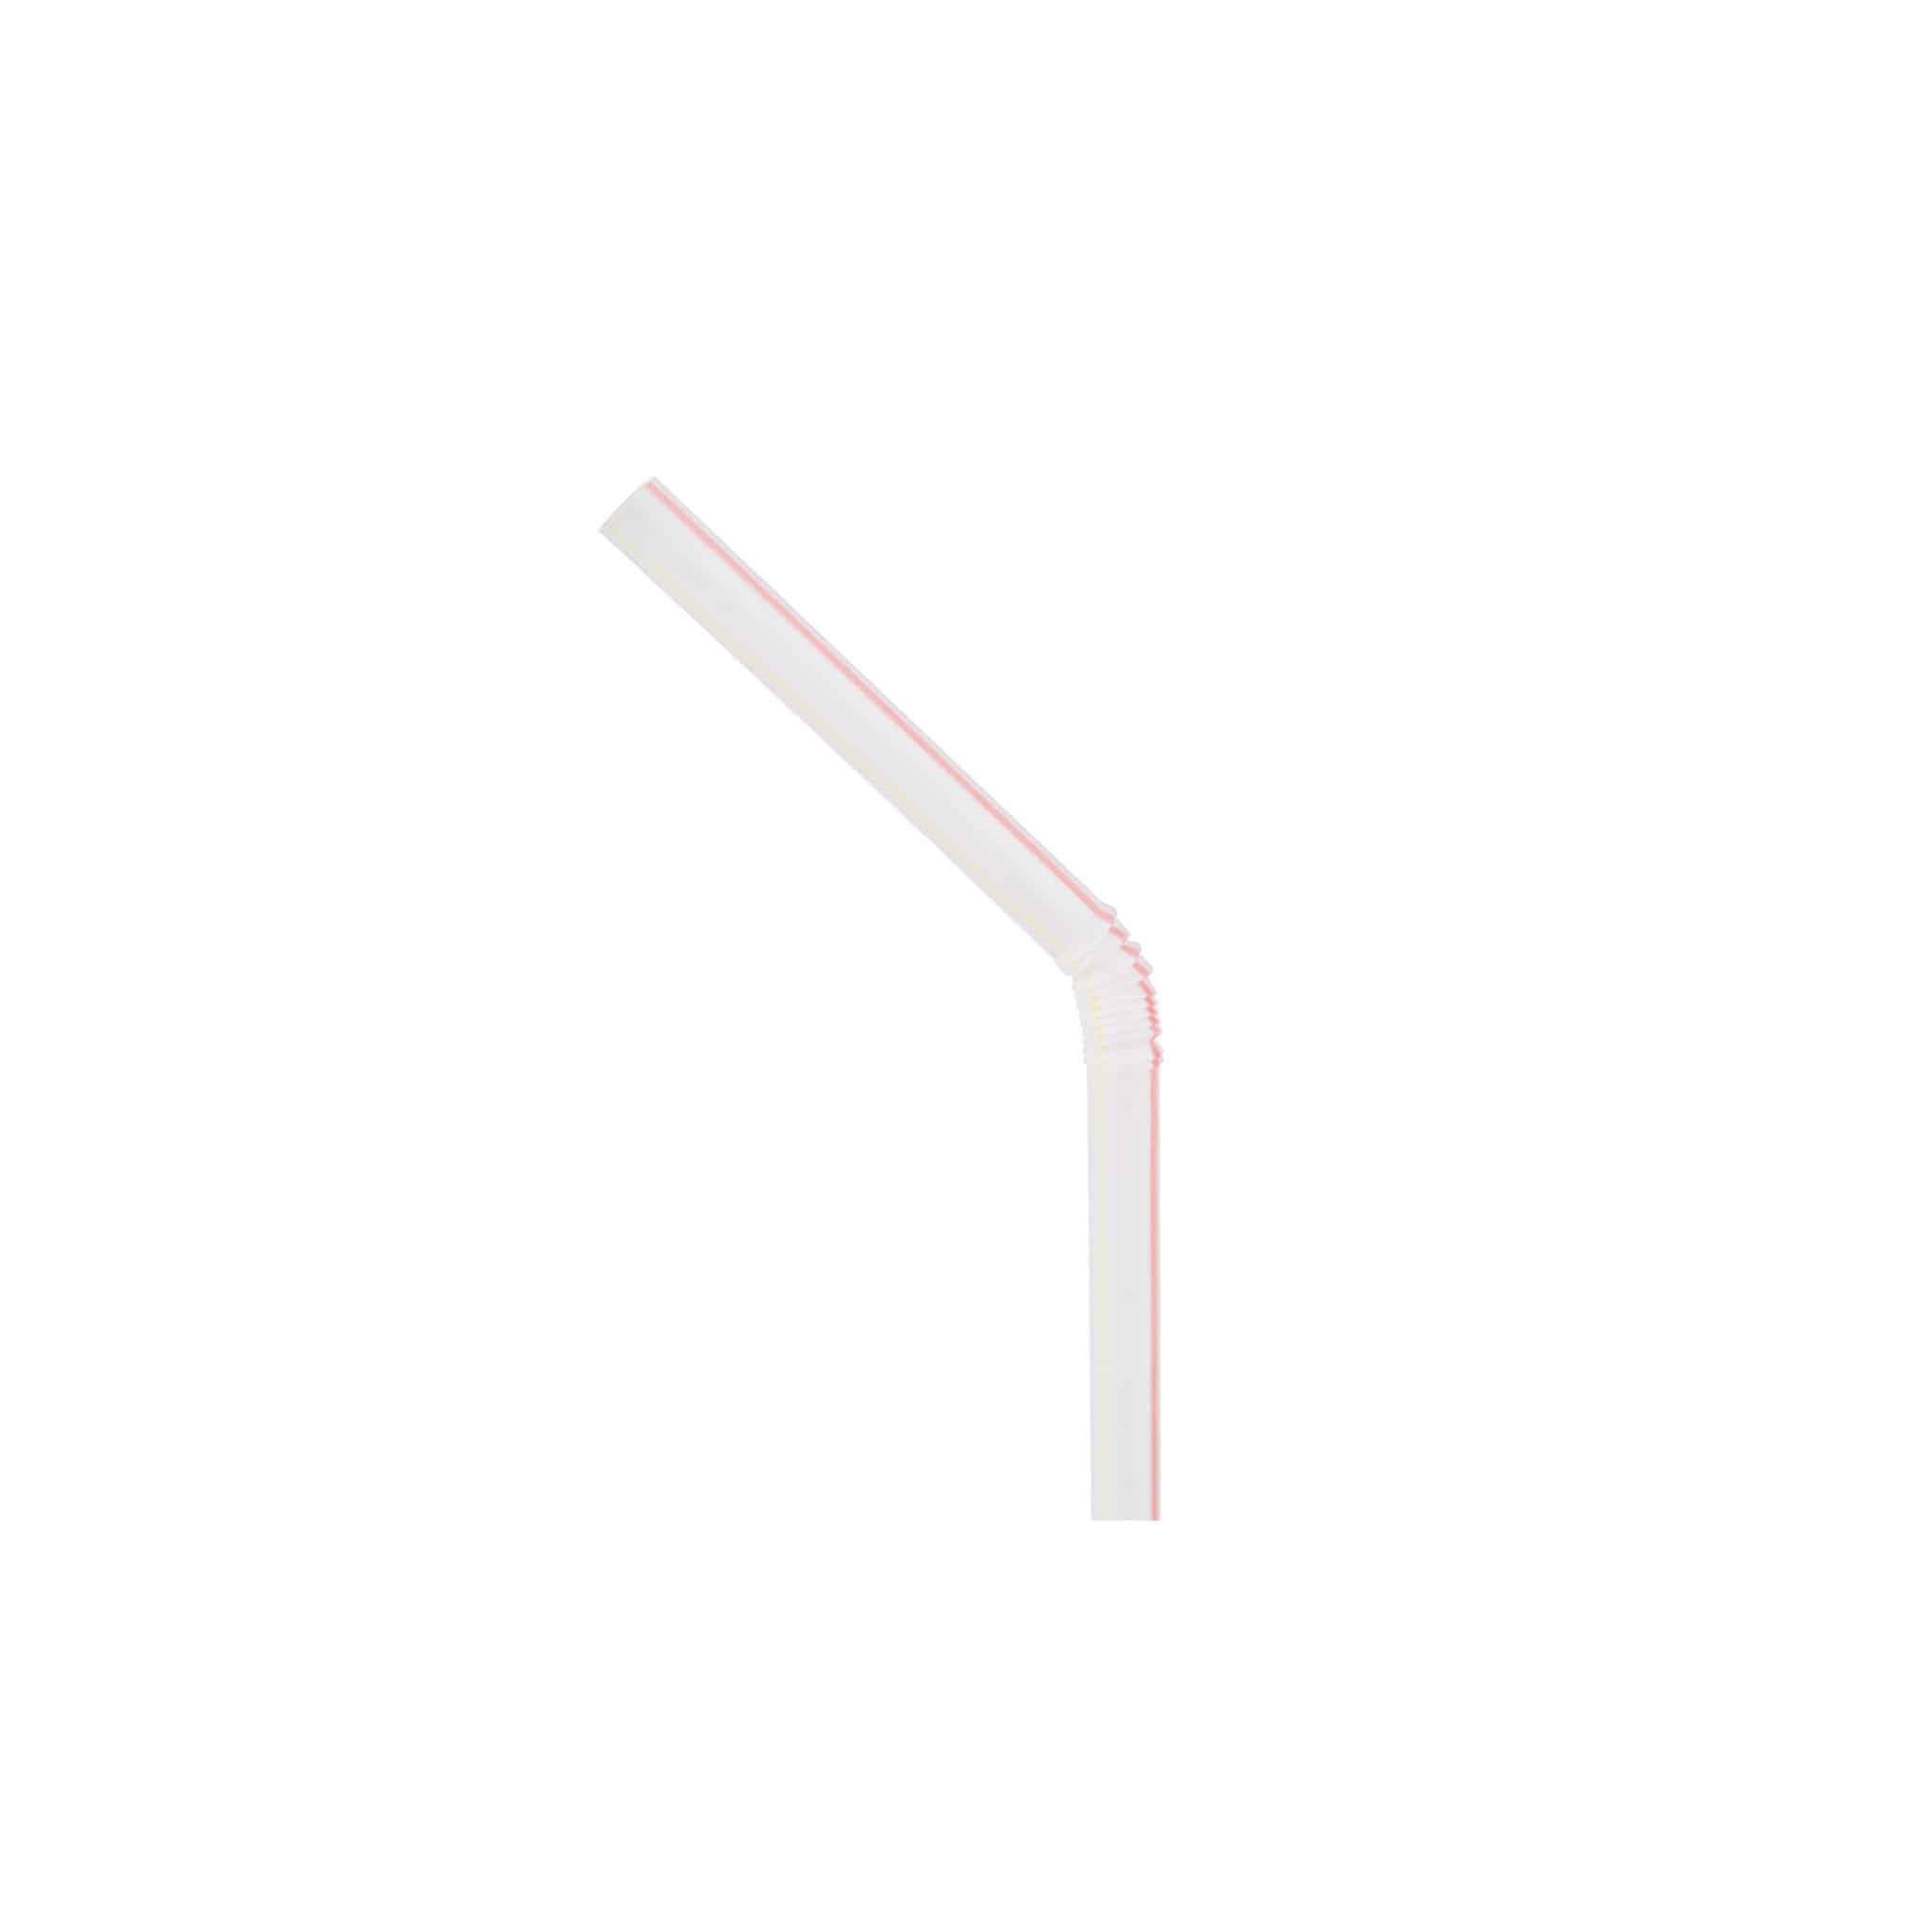 6mm Plastic Flexible Straw